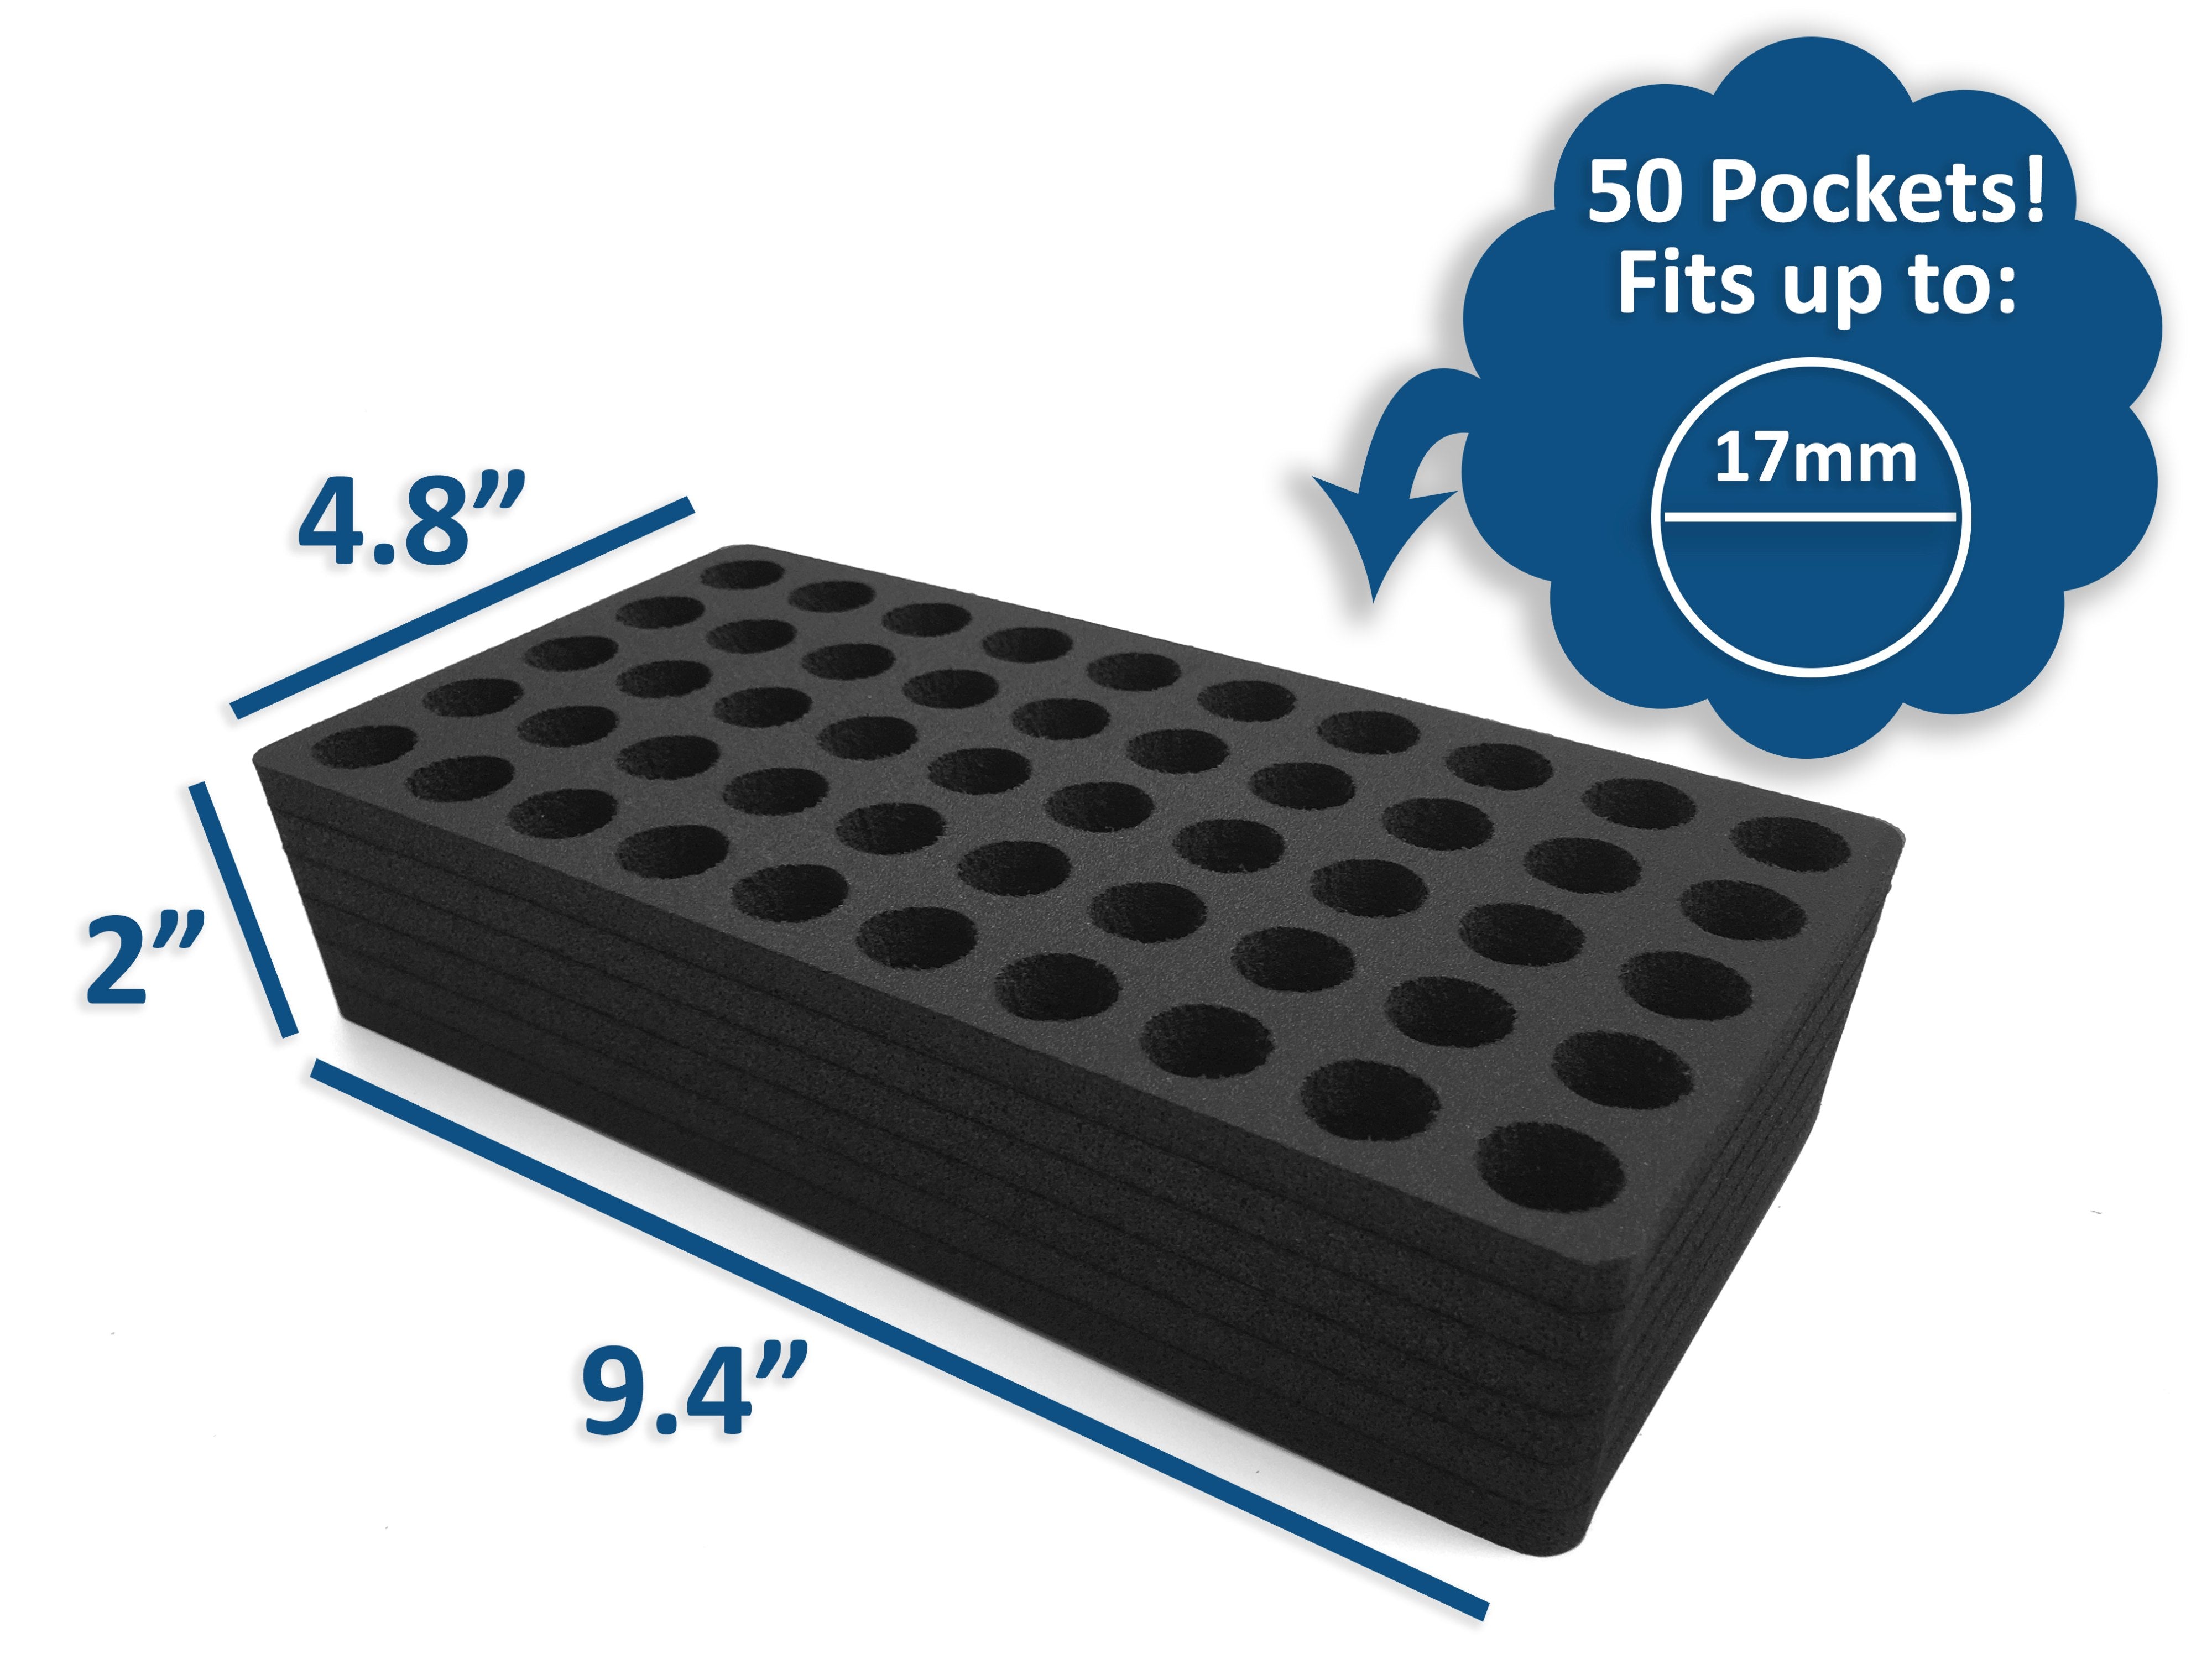 Test Tube Organizer Black Foam Storage Rack Stand Transport Holds 50 Tubes Fits up to 17mm Diameter Tubes